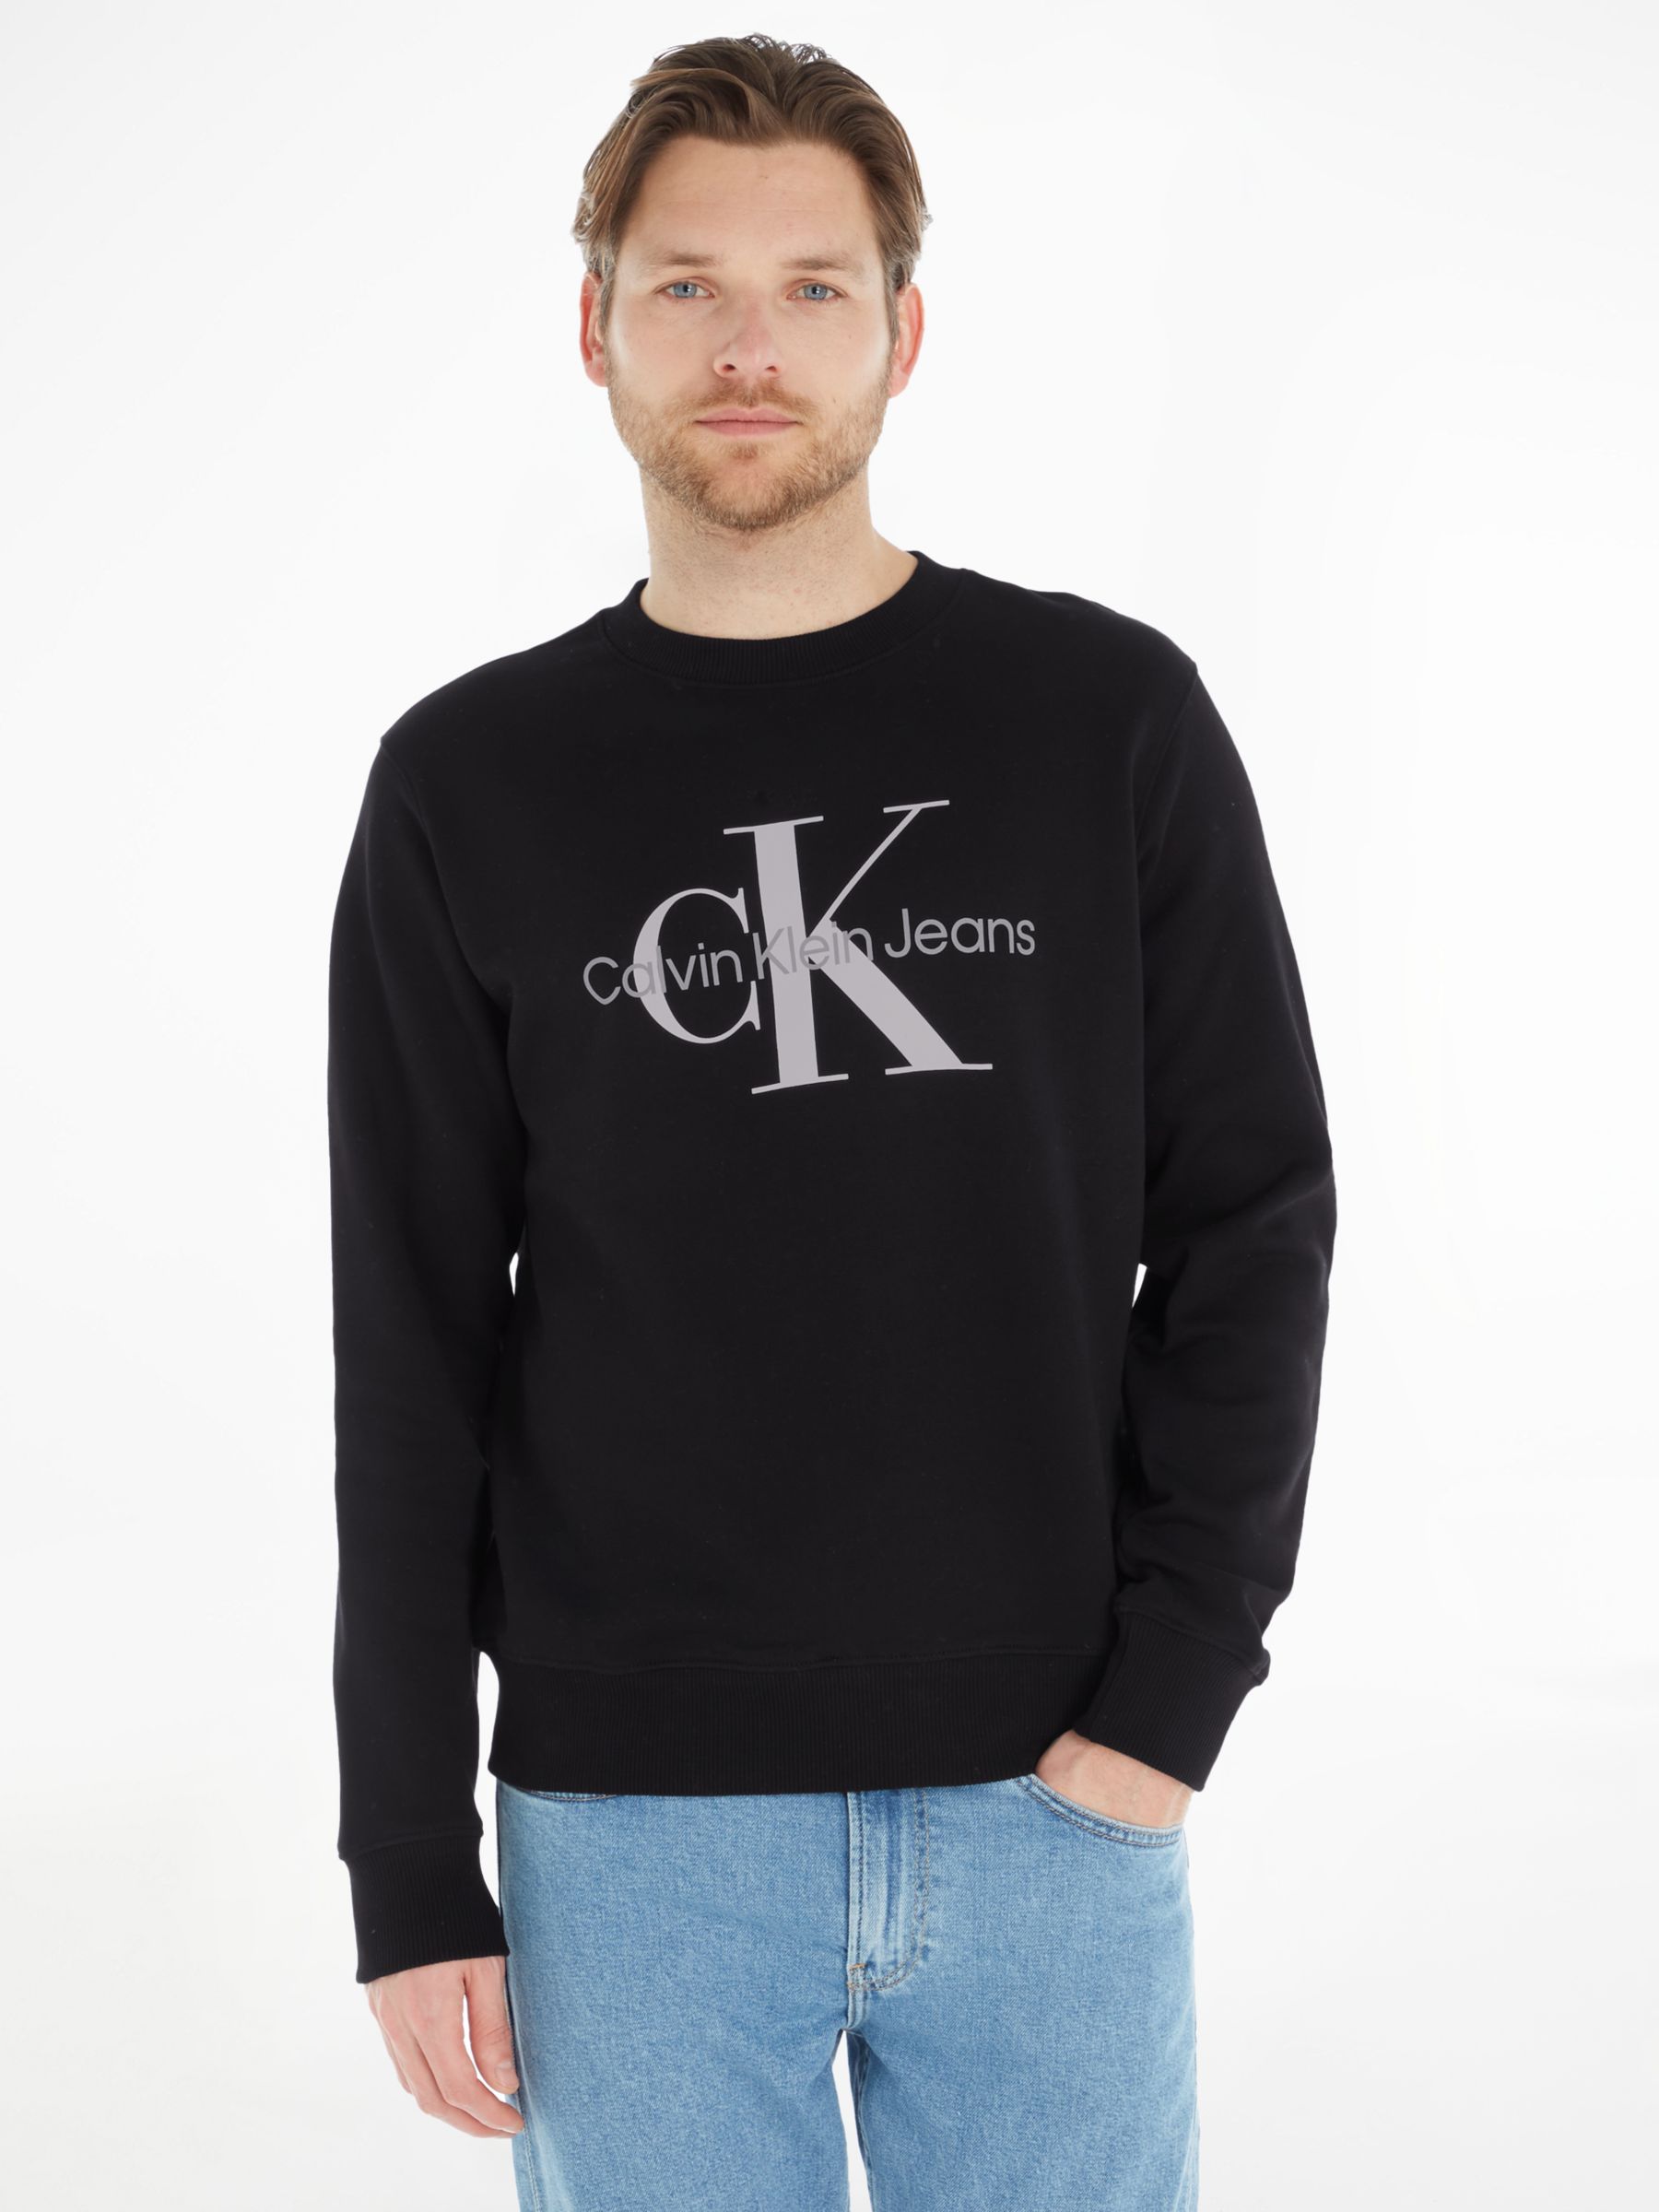 Logo Calvin at Monogram John Klein Partners Black & Core Jeans Sweatshirt, Cotton Lewis Ck